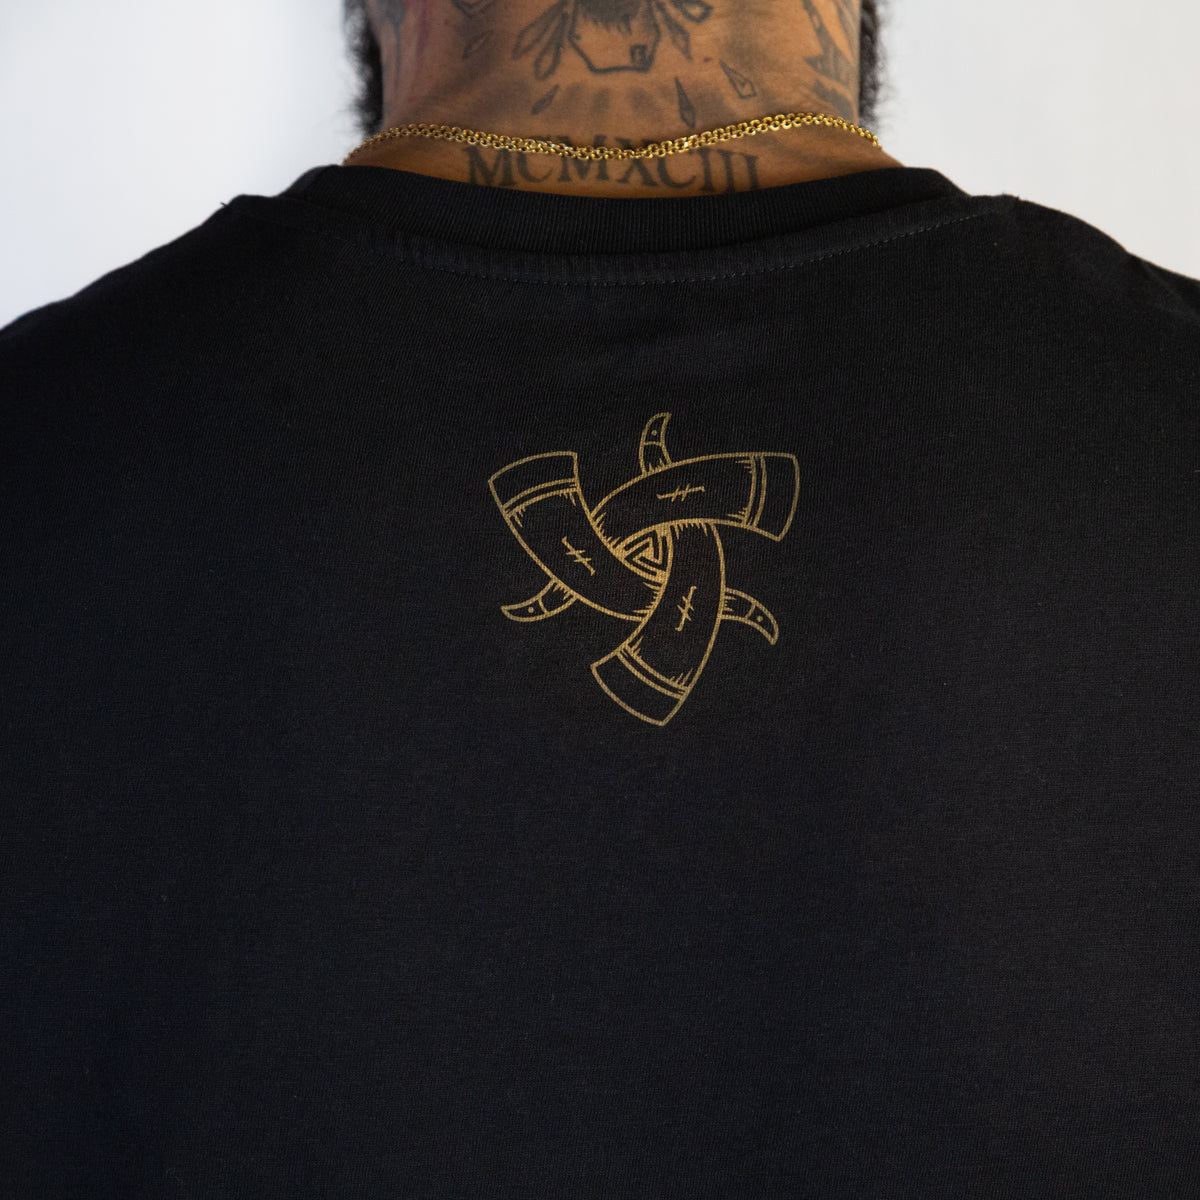 Back of Black T shirt with Horns of Odin Logo on neck